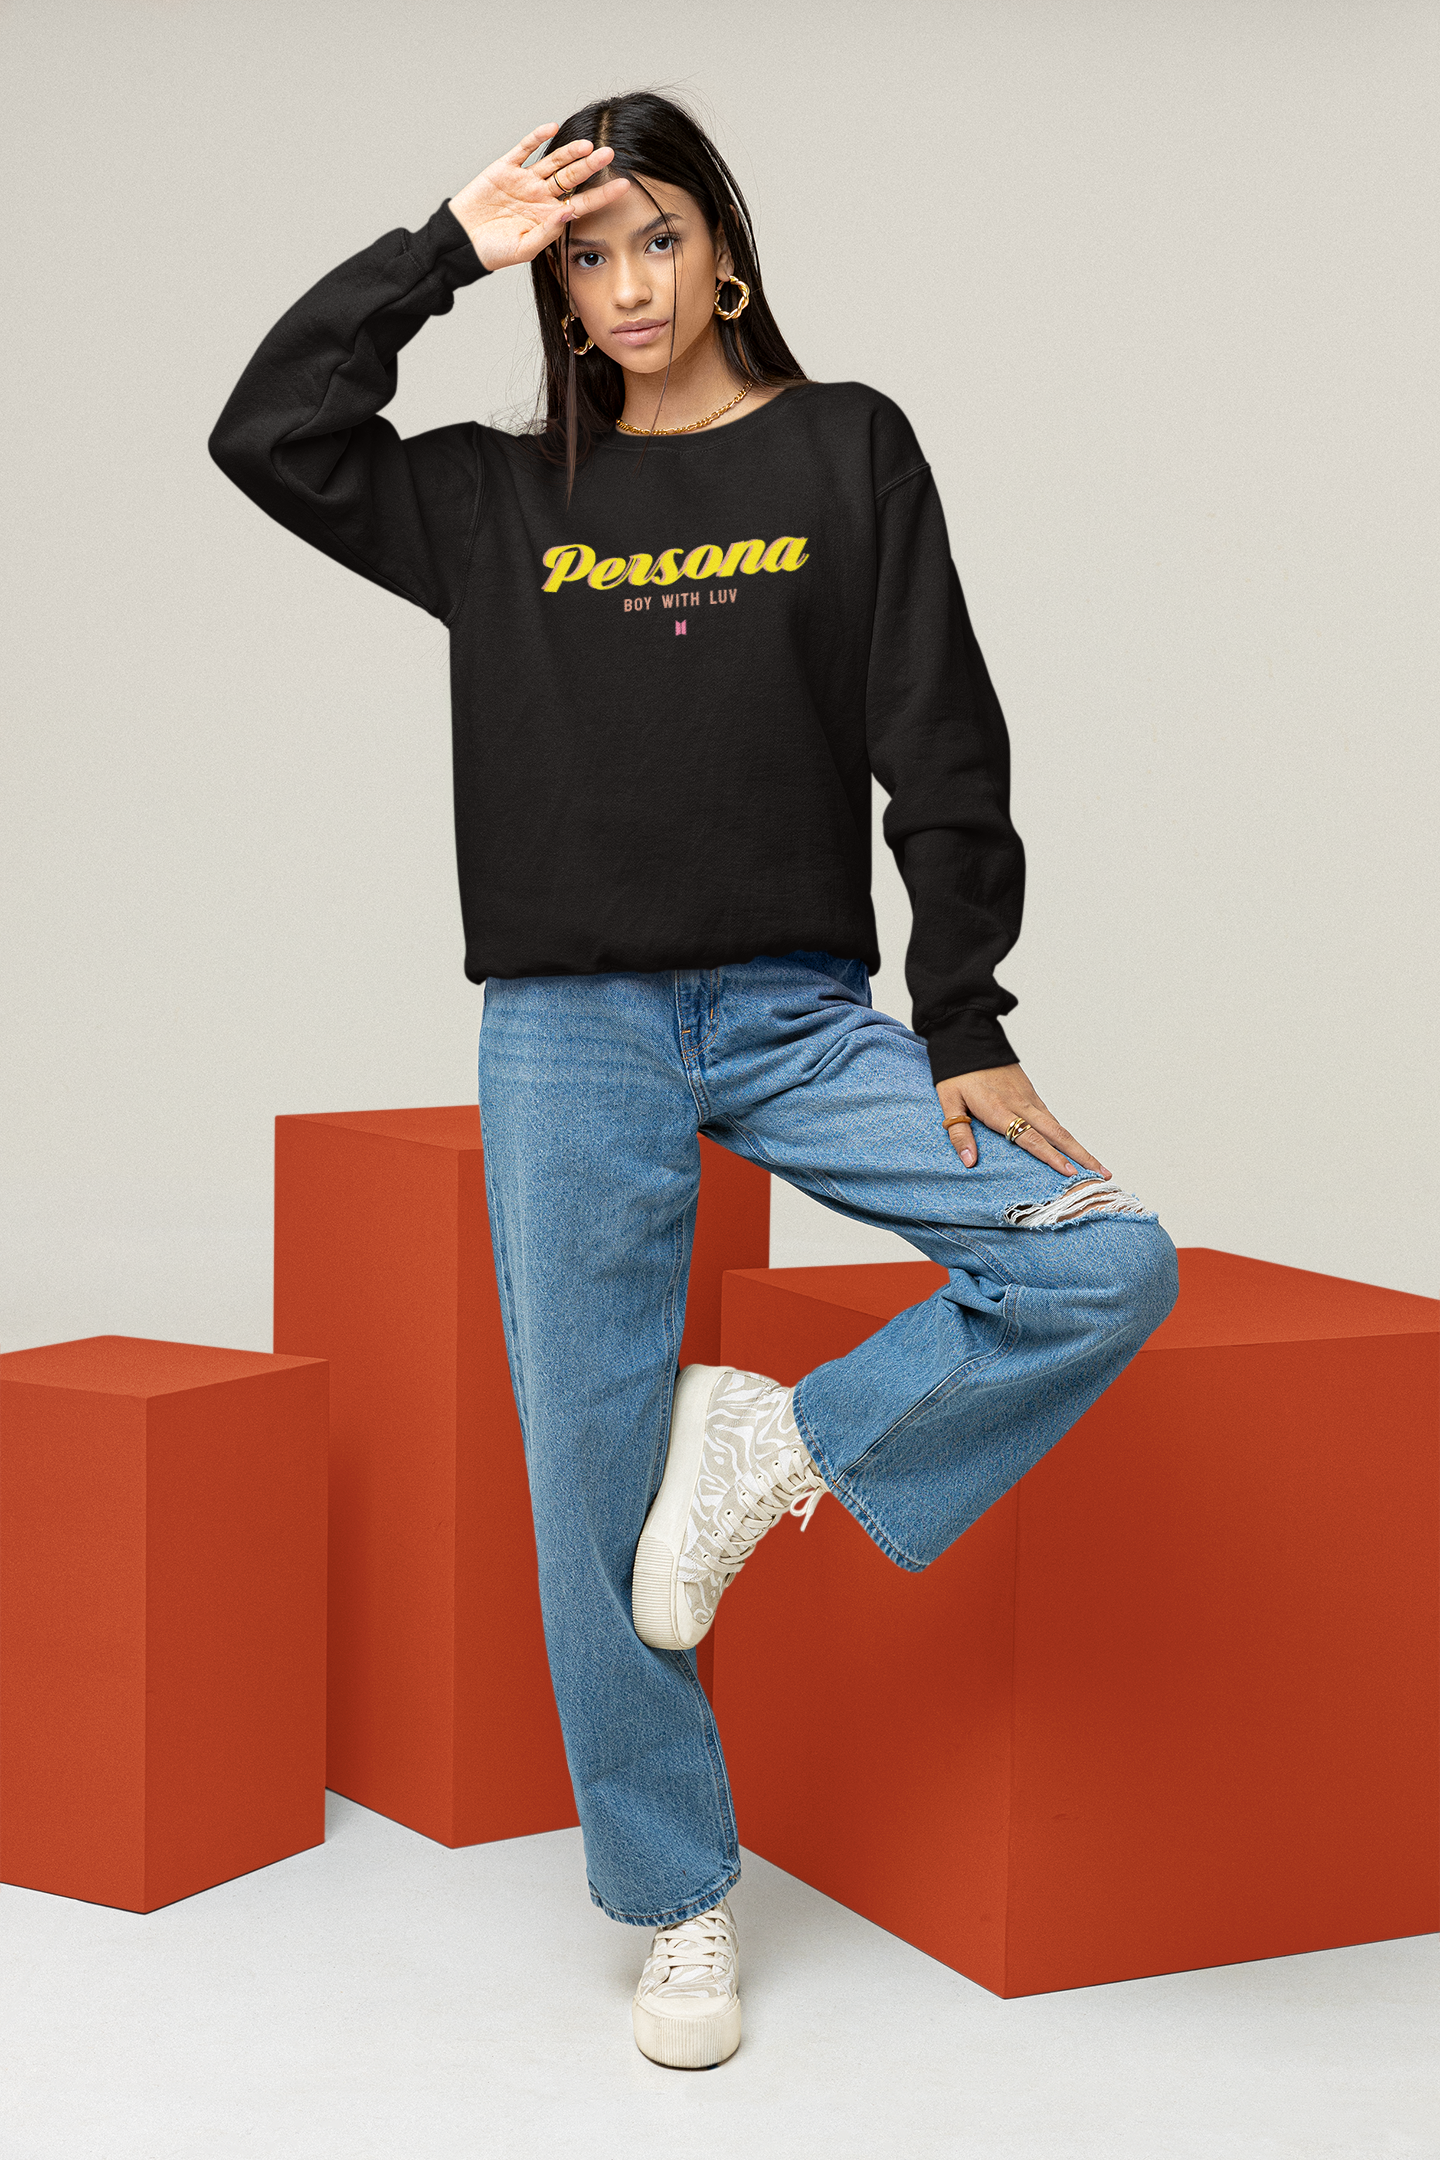 Persona- Boy with love: BTS - Winter Sweatshirts BLACK